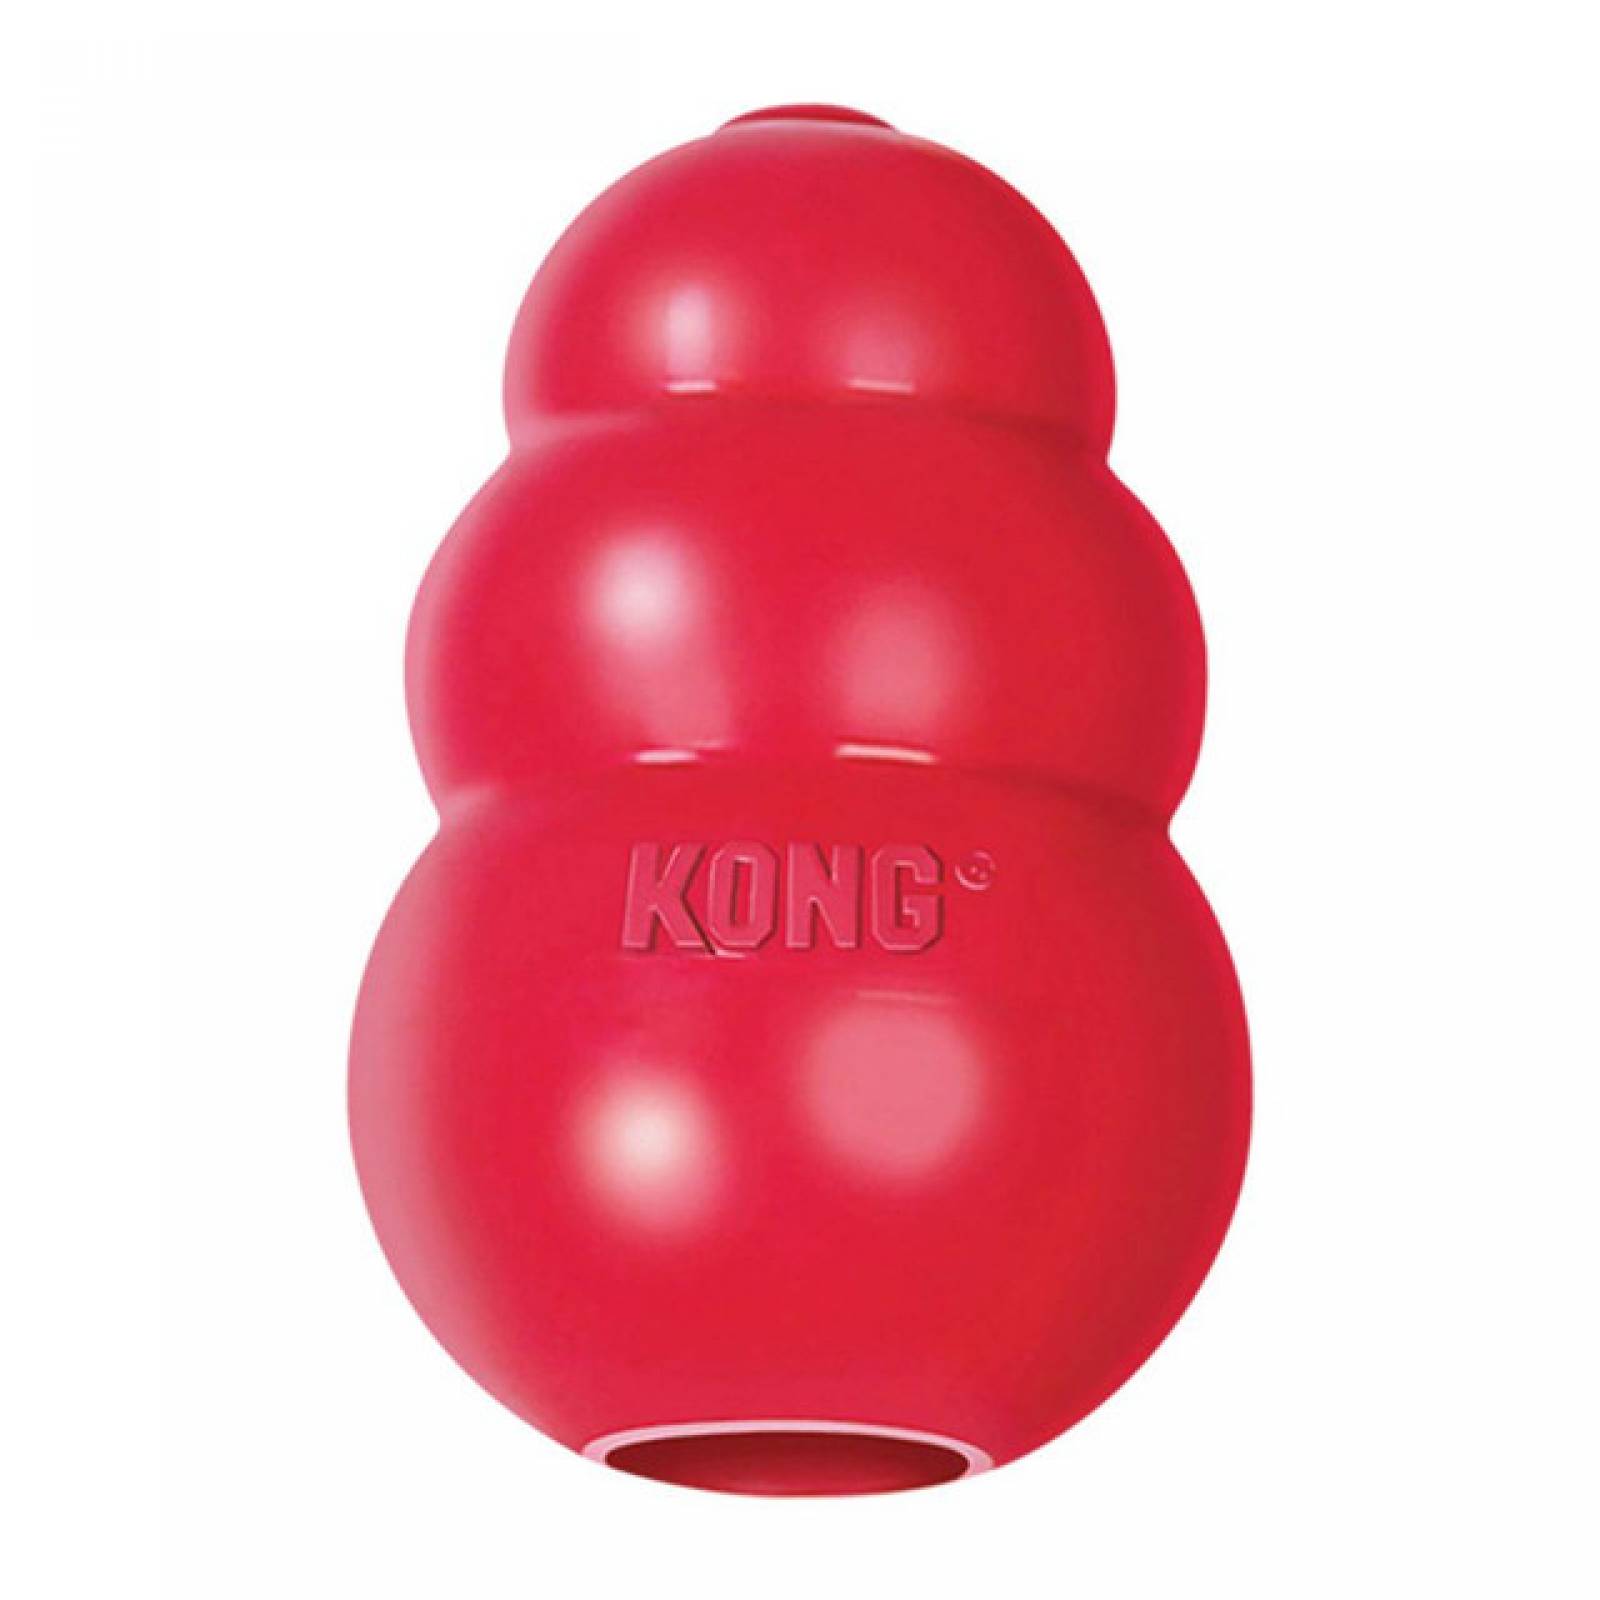 Kong Classic juguete para perro Ch rojo